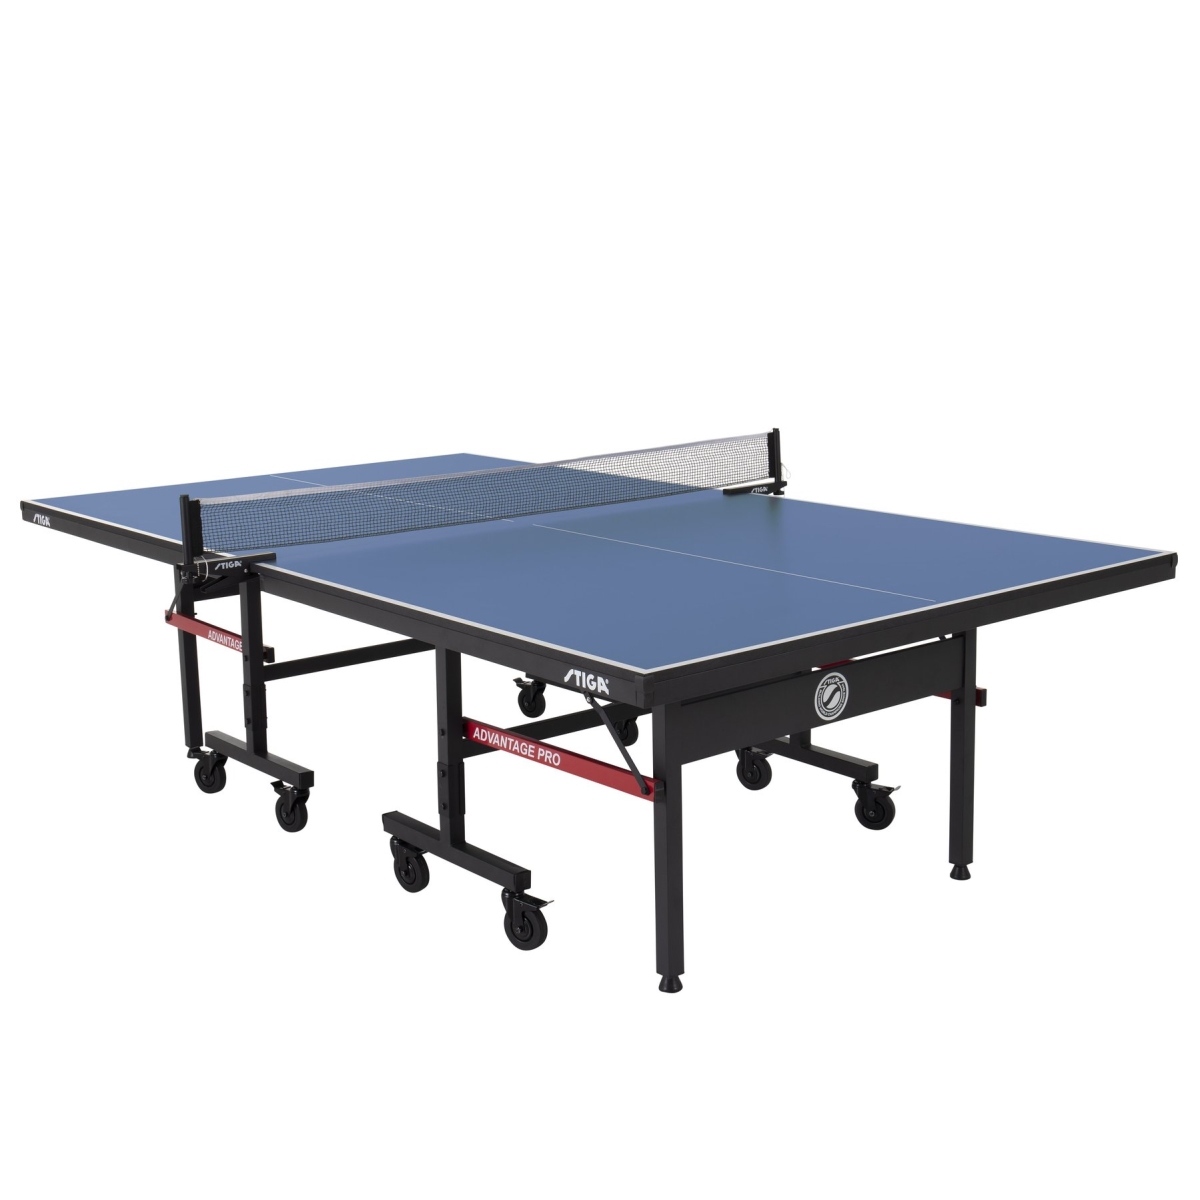 Picture of Escalade Sports ECAT8581W Stiga Advantage Pro Table Tournament Quality Indoor Tennis Table